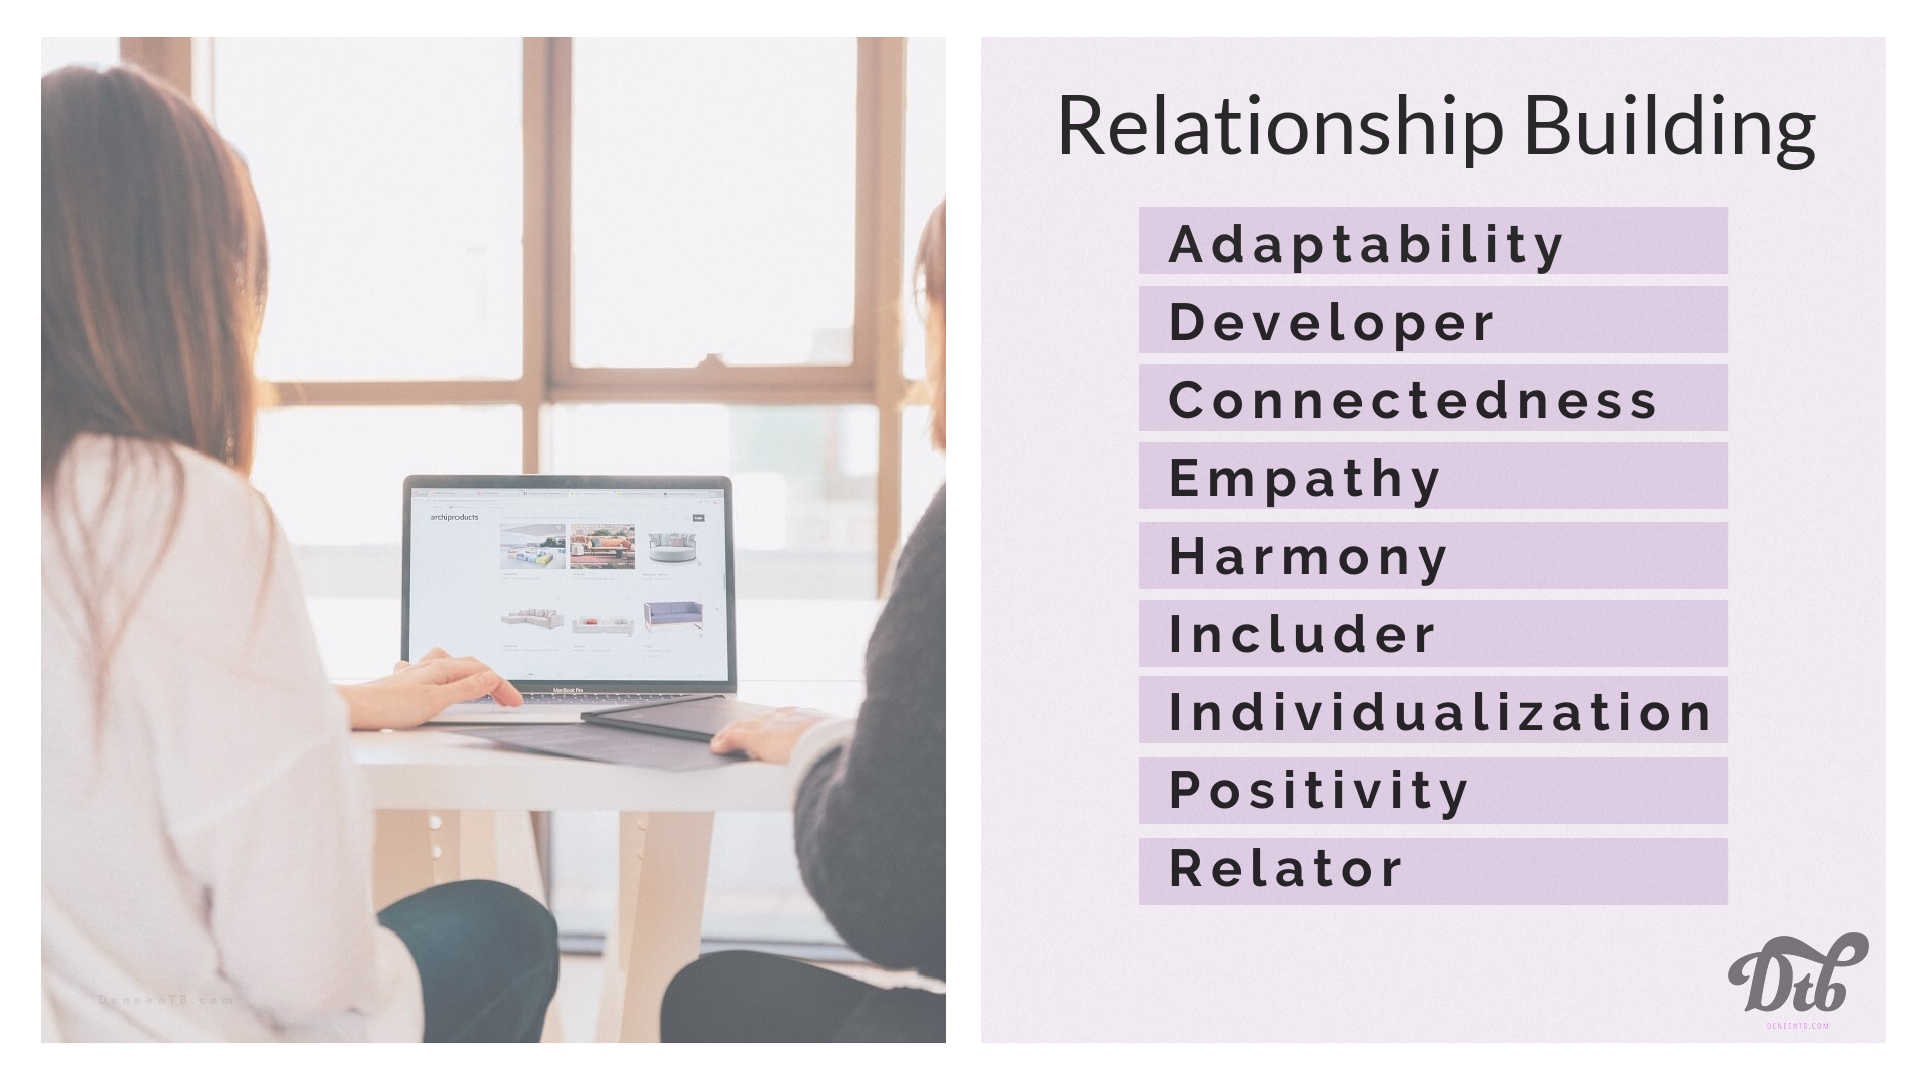 A list of relationship building characteristics